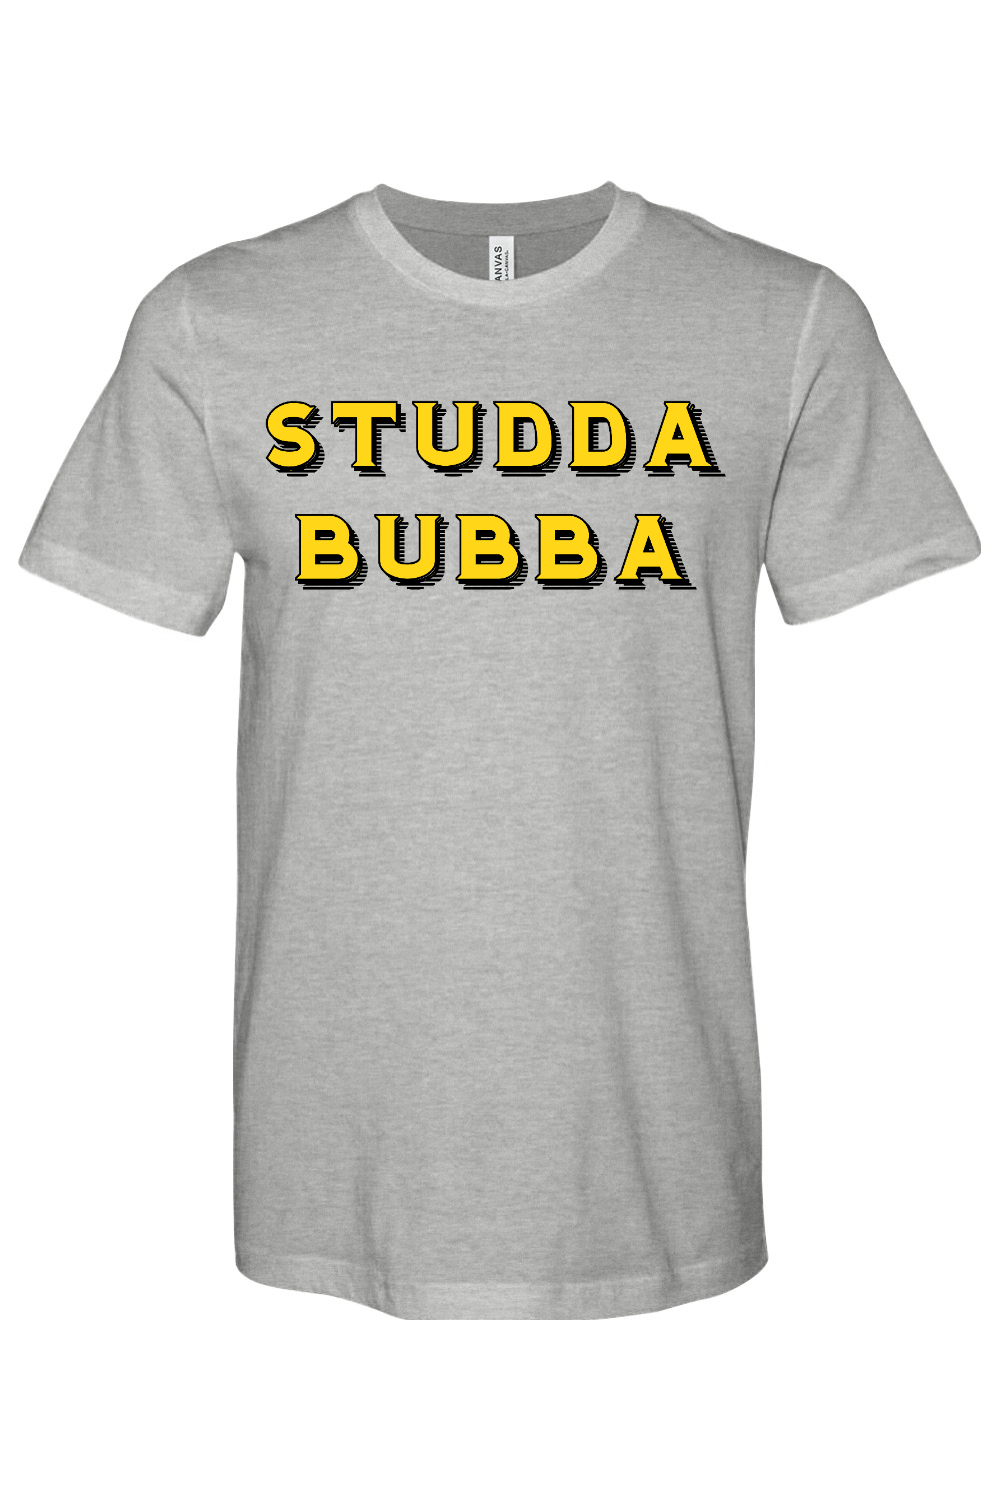 Studda Bubba - Bella + Canvas Heathered Jersey Tee - Yinzylvania